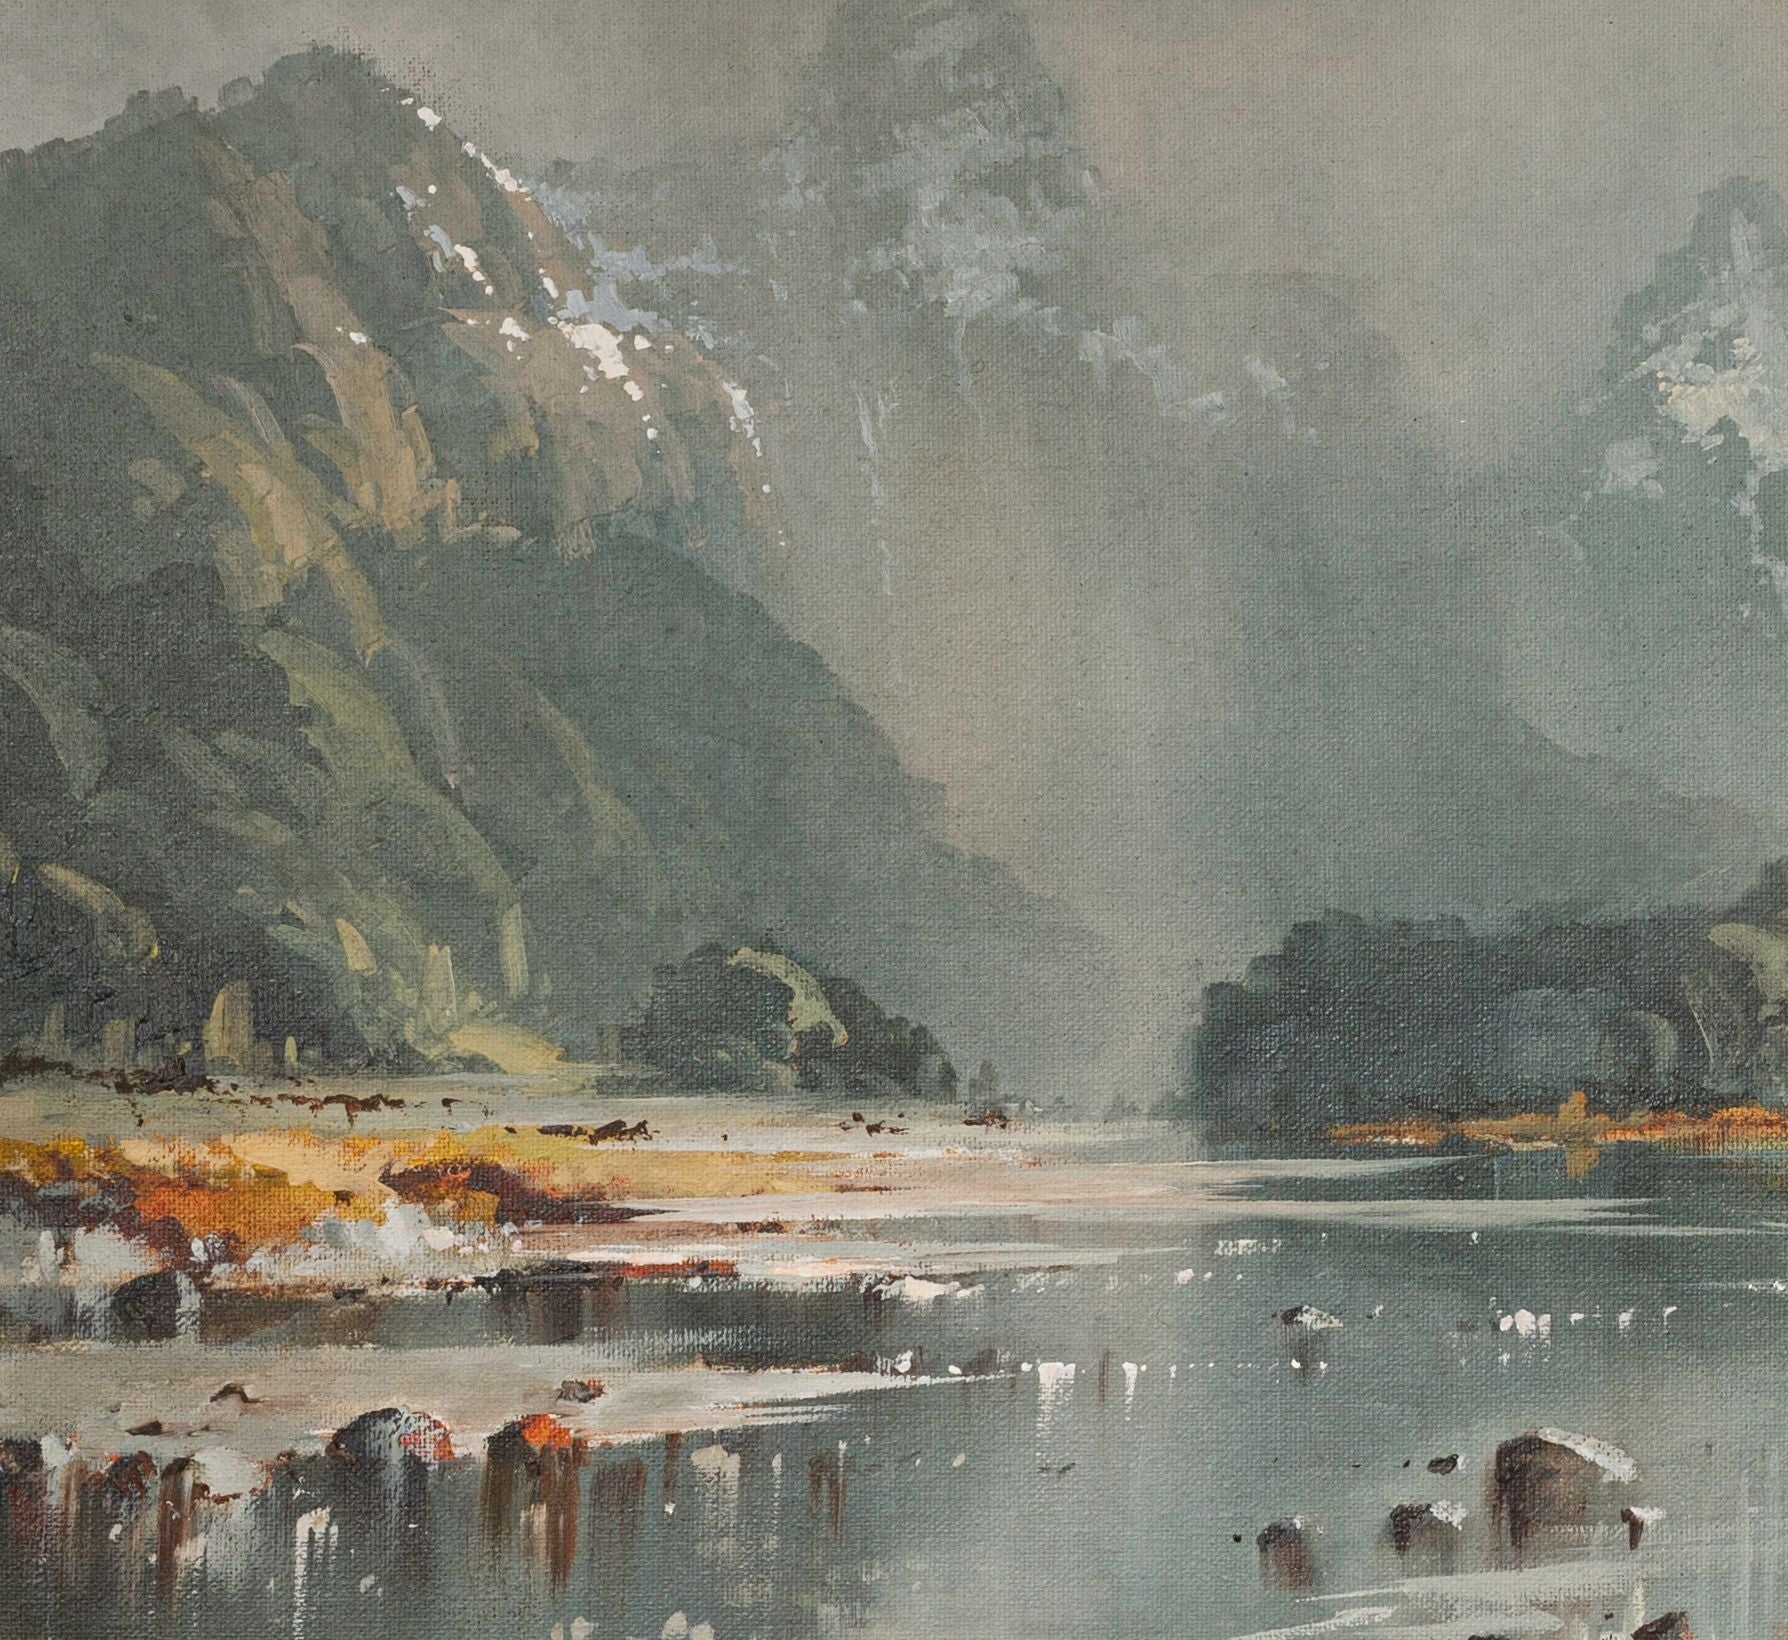 Partial detail of Framed Oil Painting by renowned landscape artist Neil J Bartlett Dart Valley Glenorchy near Queenstown NZ Silver Fern Gallery